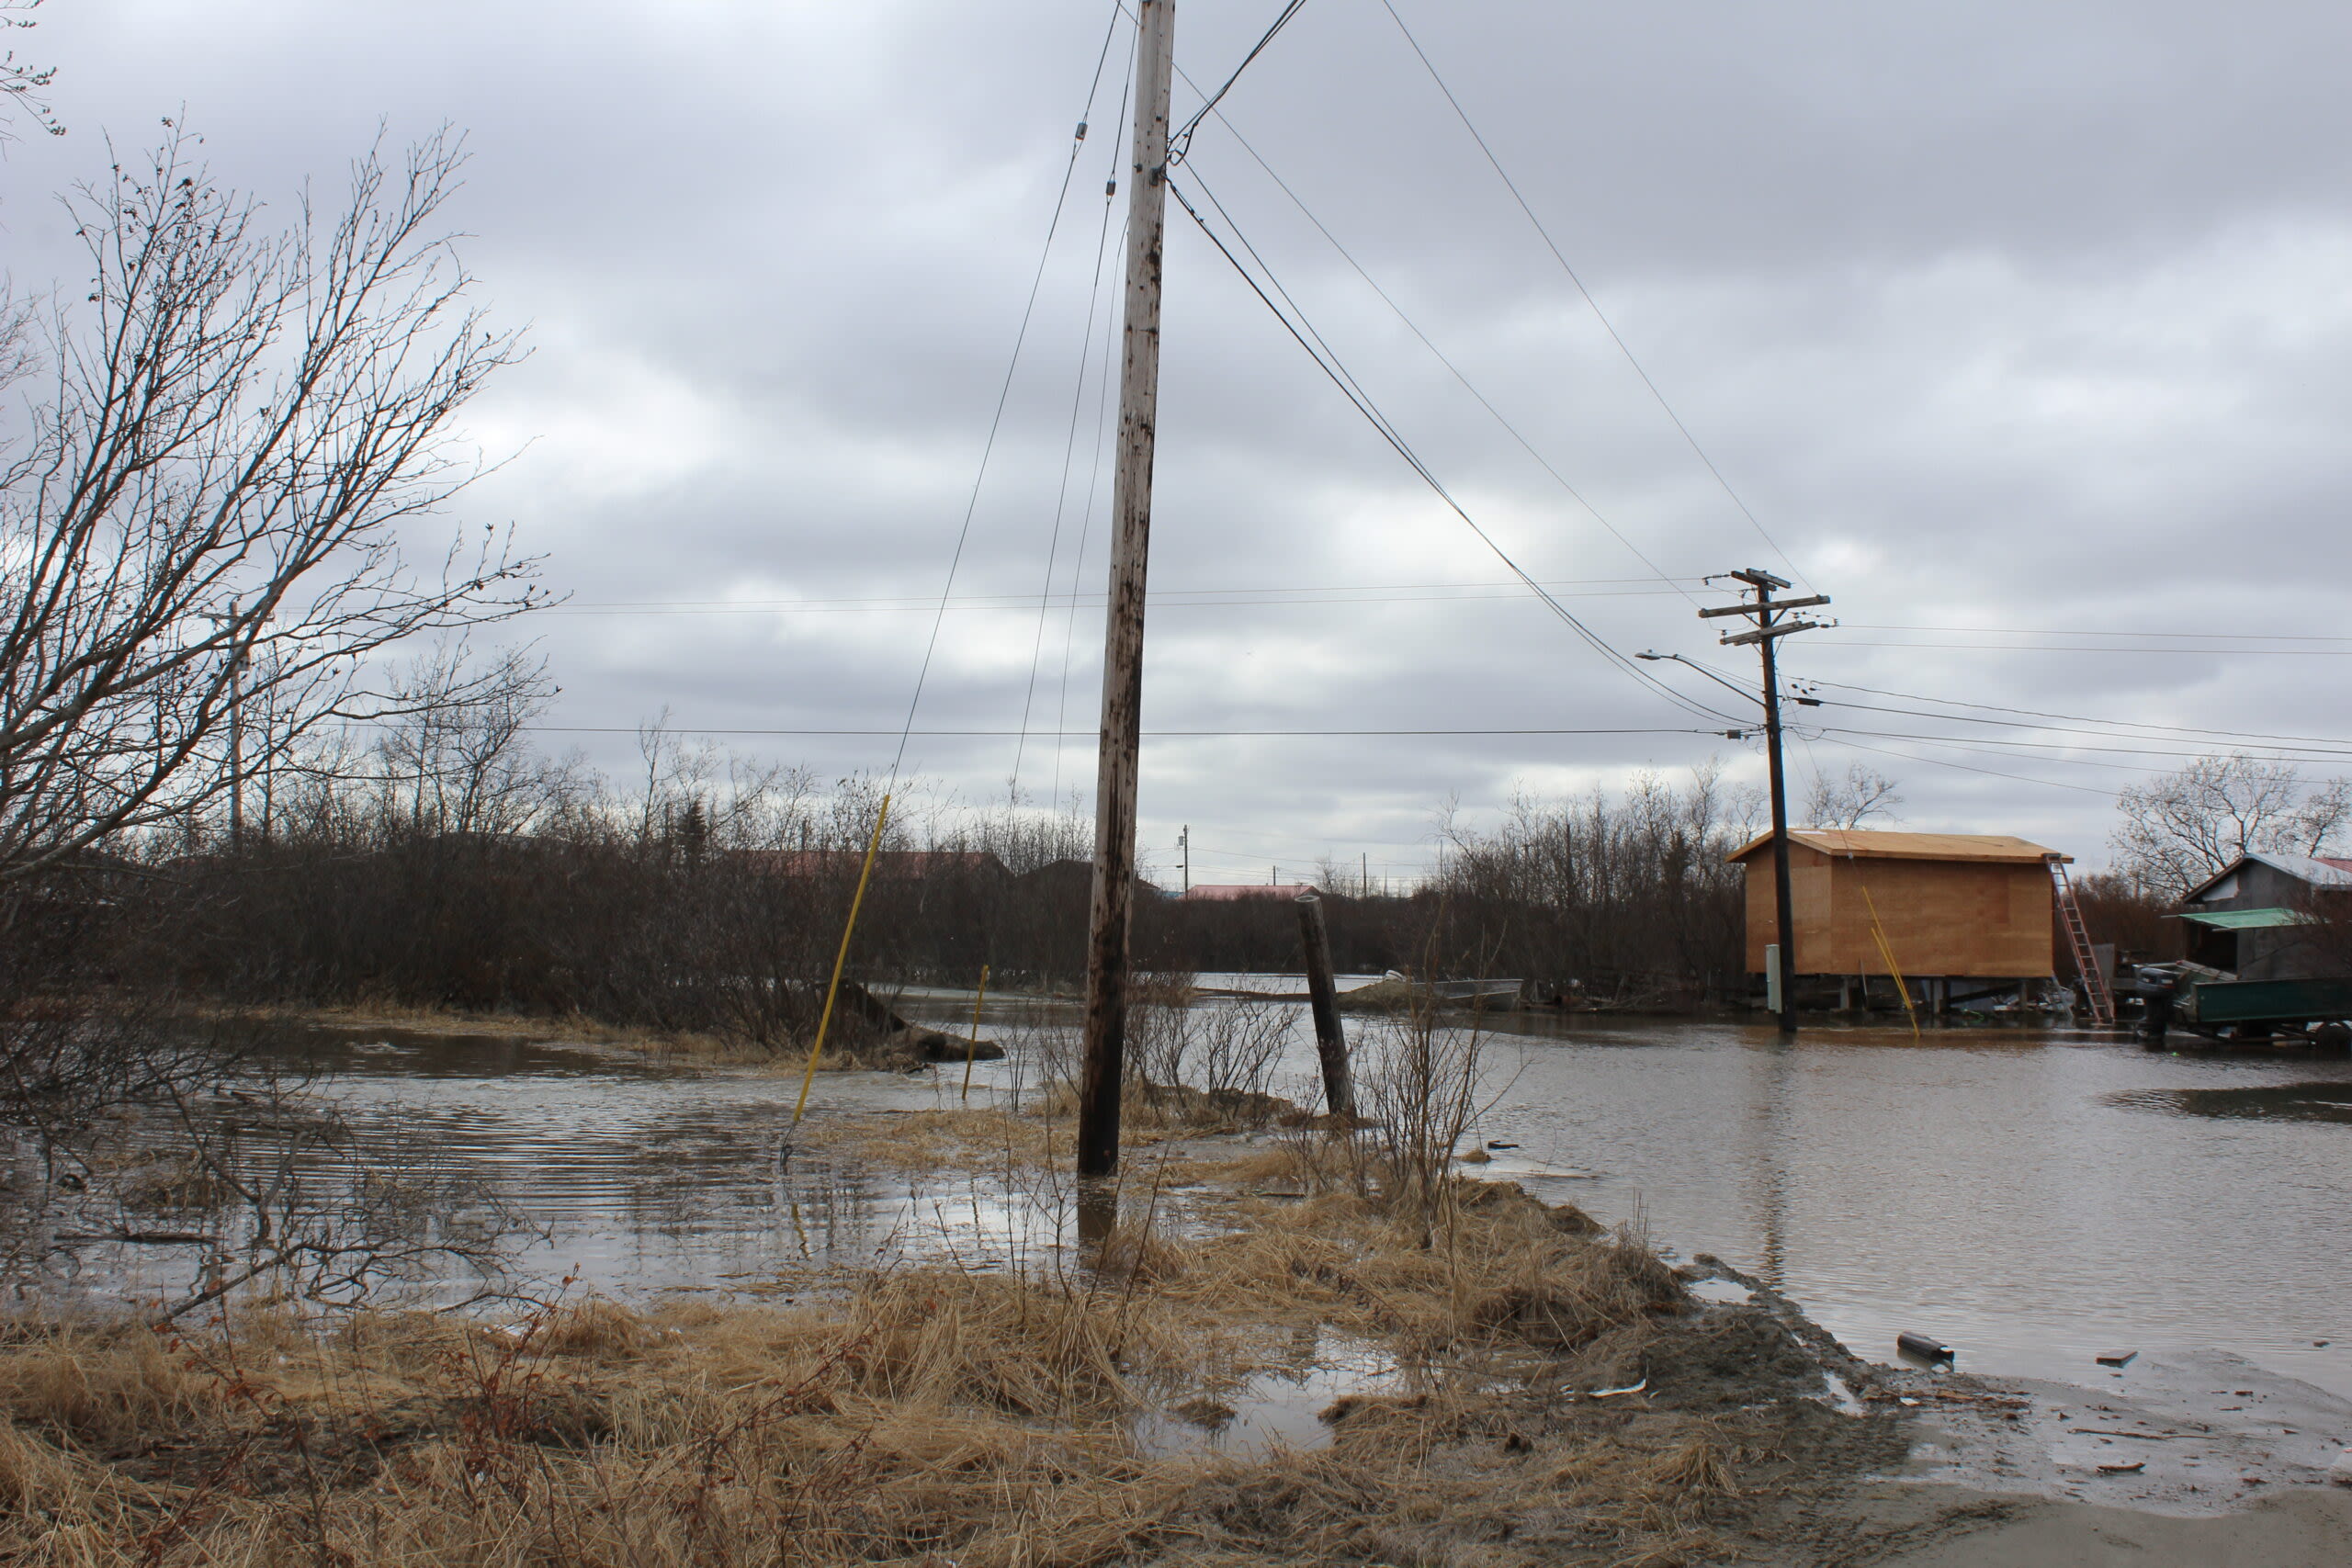 Kuskokwim River breakup floods roads, impacts drinking water for some communities